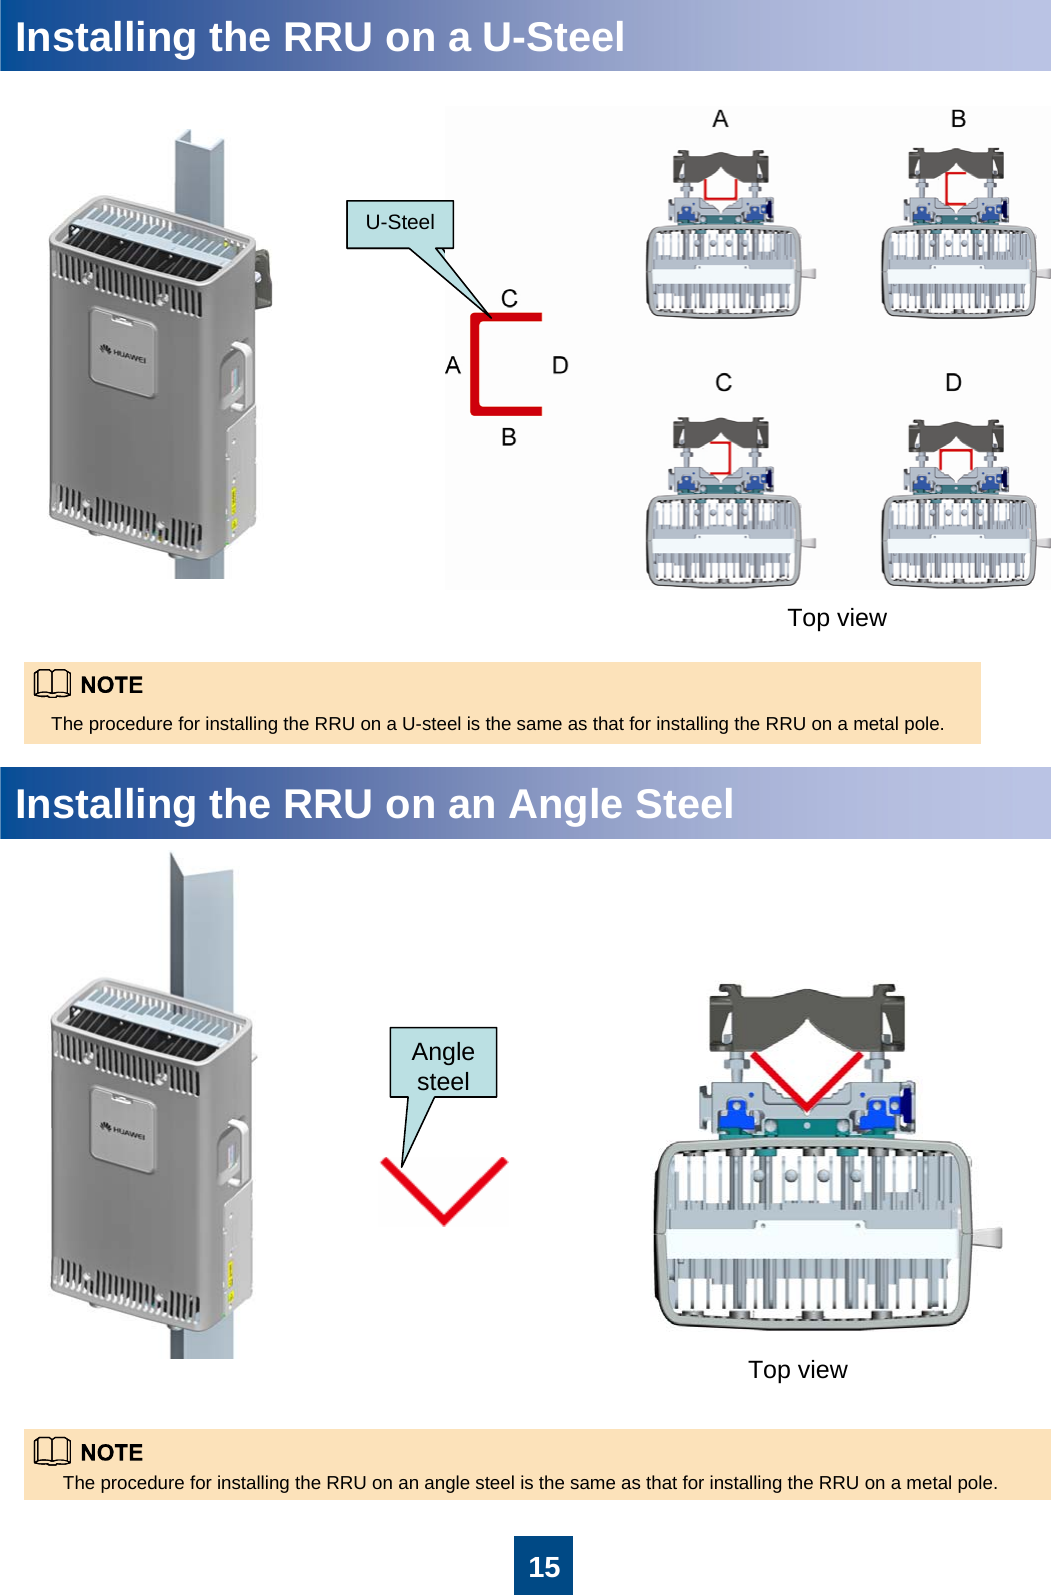 15Installing the RRU on a U-SteelThe procedure for installing the RRU on a U-steel is the same as that for installing the RRU on a metal pole.Installing the RRU on an Angle SteelThe procedure for installing the RRU on an angle steel is the same as that for installing the RRU on a metal pole.U-steelAngle steelTop viewTop viewU-Steel